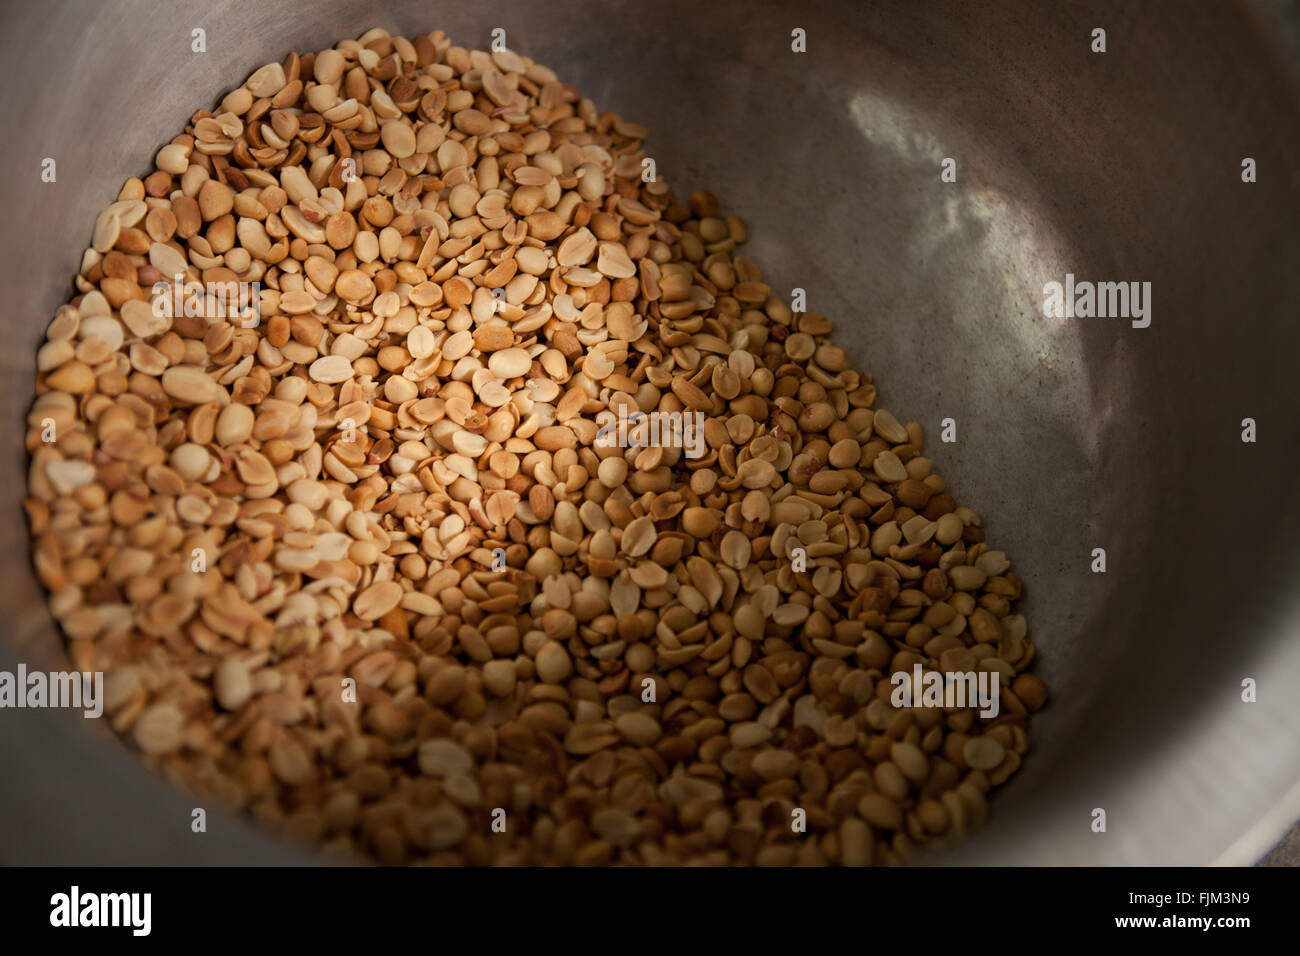 A bowl of peanuts Stock Photo